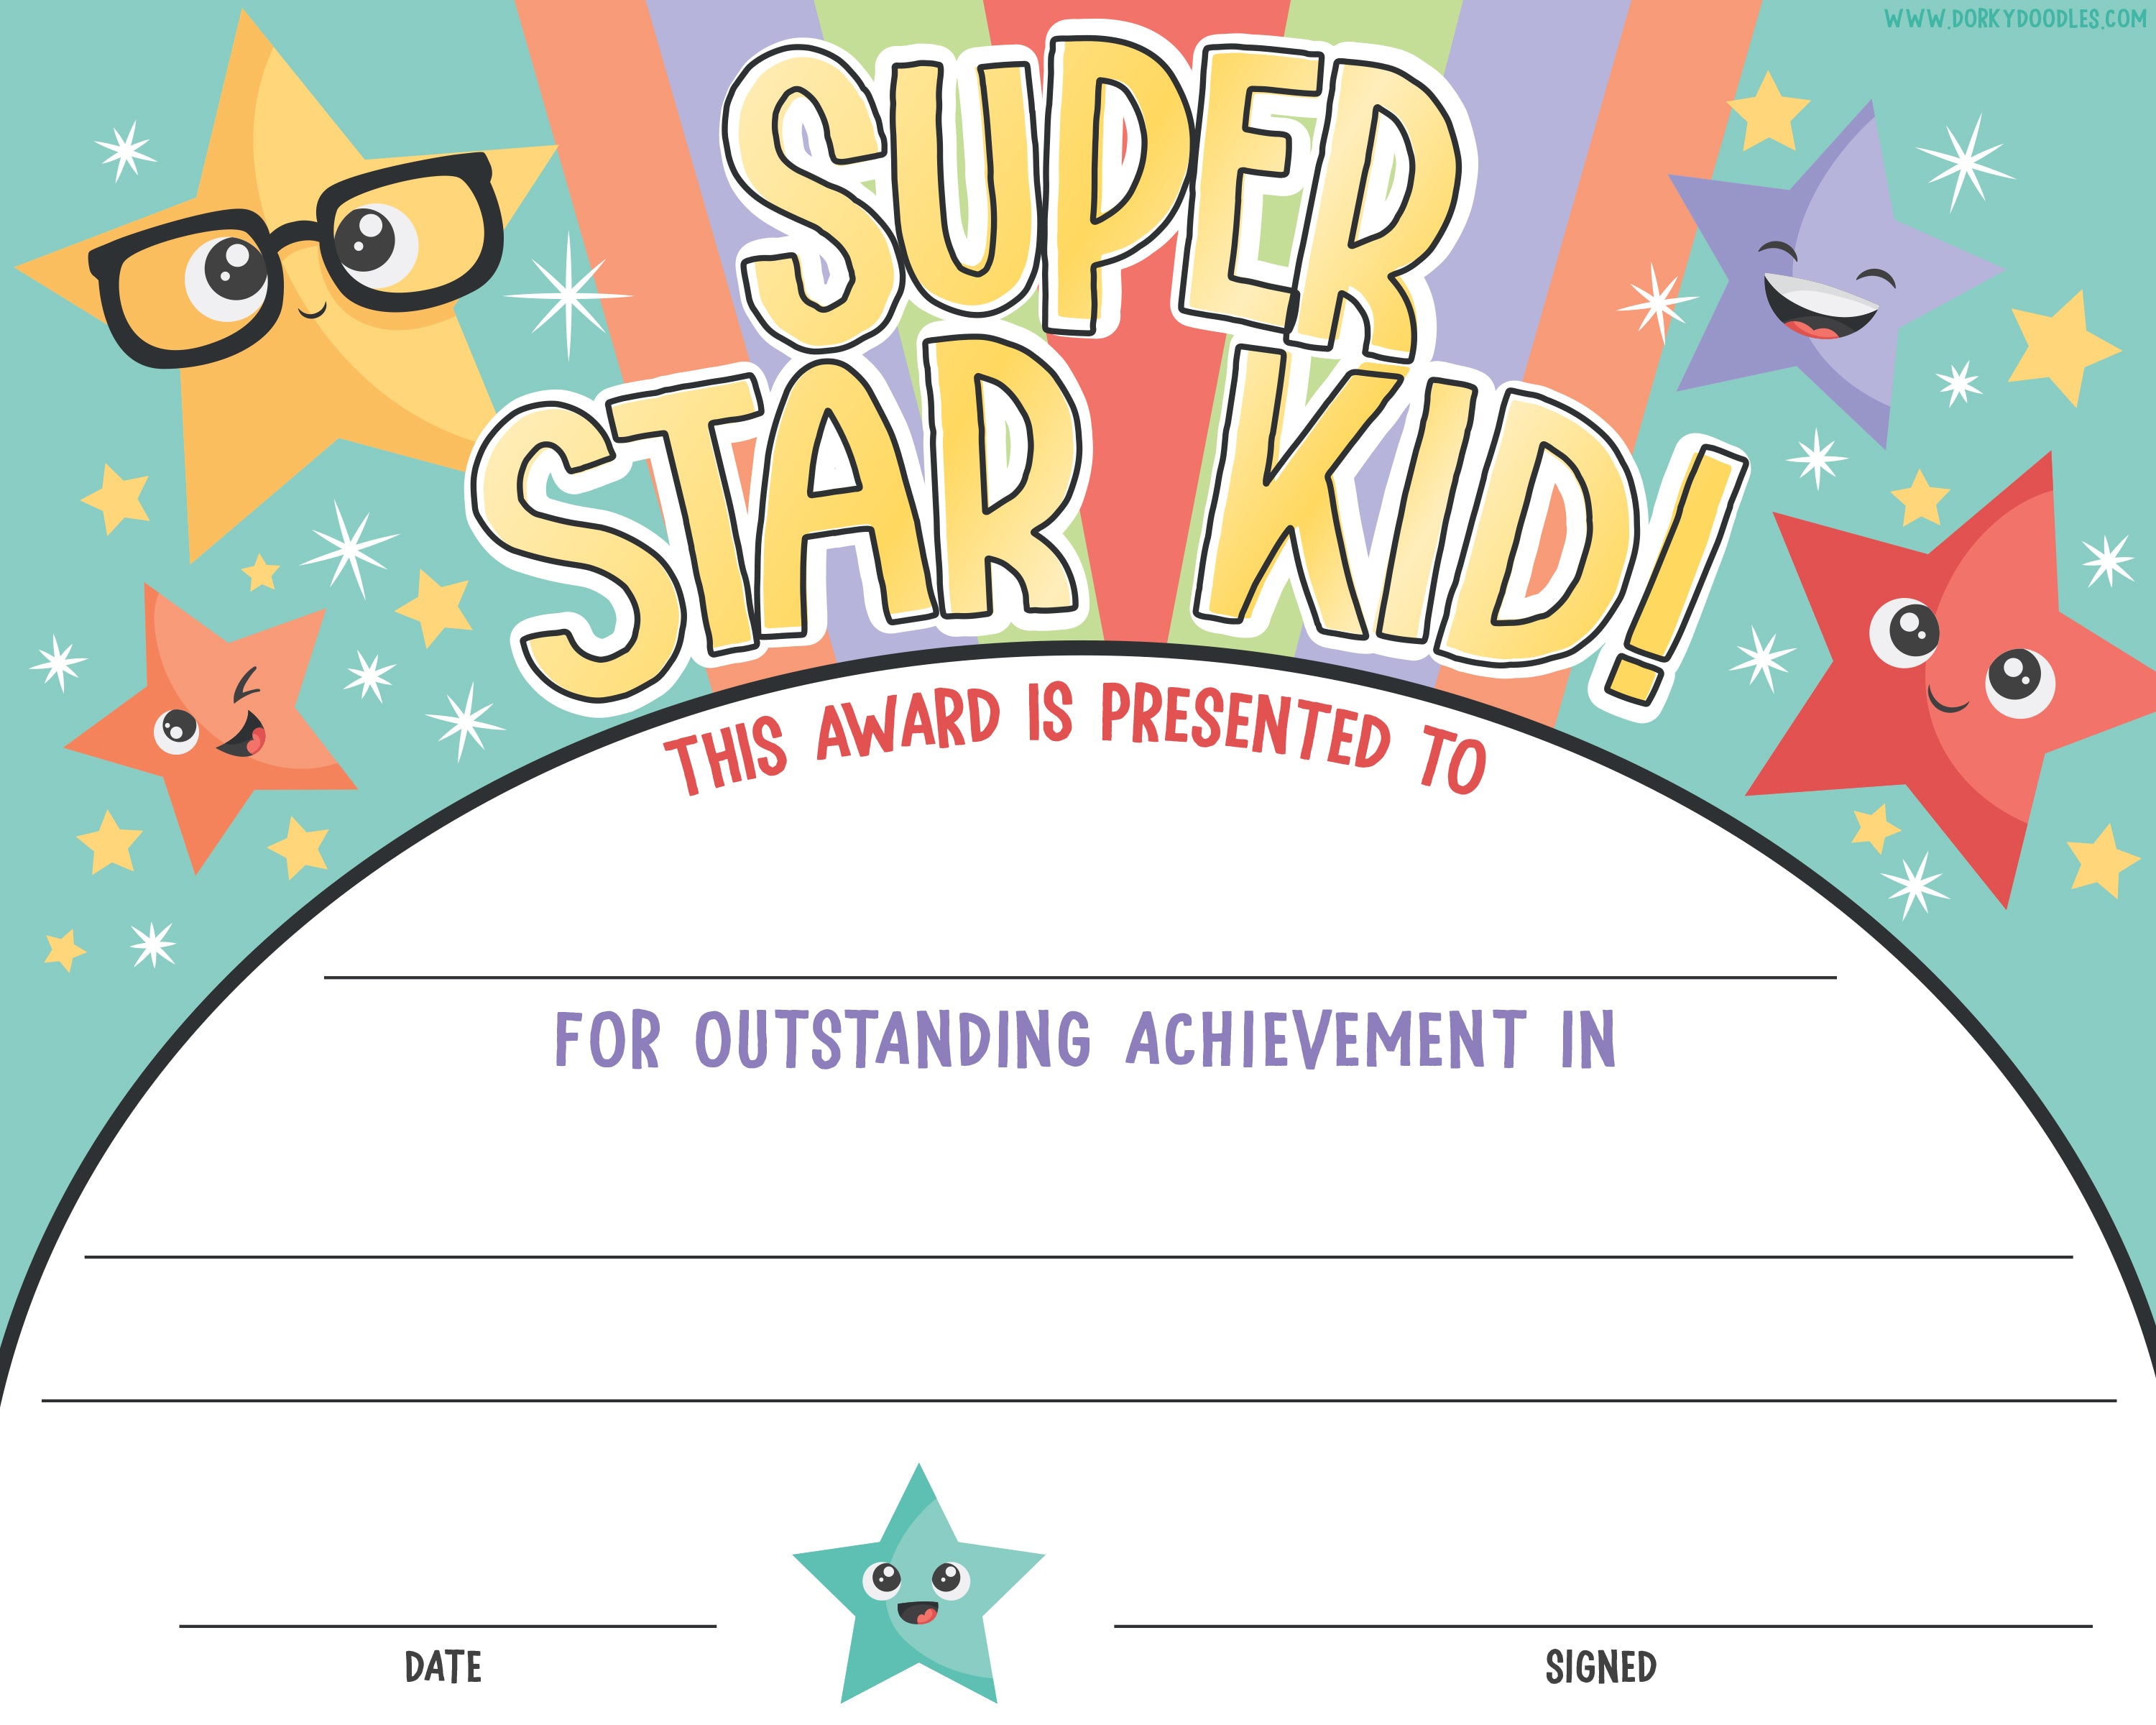 printable-award-certificate-for-kids-dorky-doodles